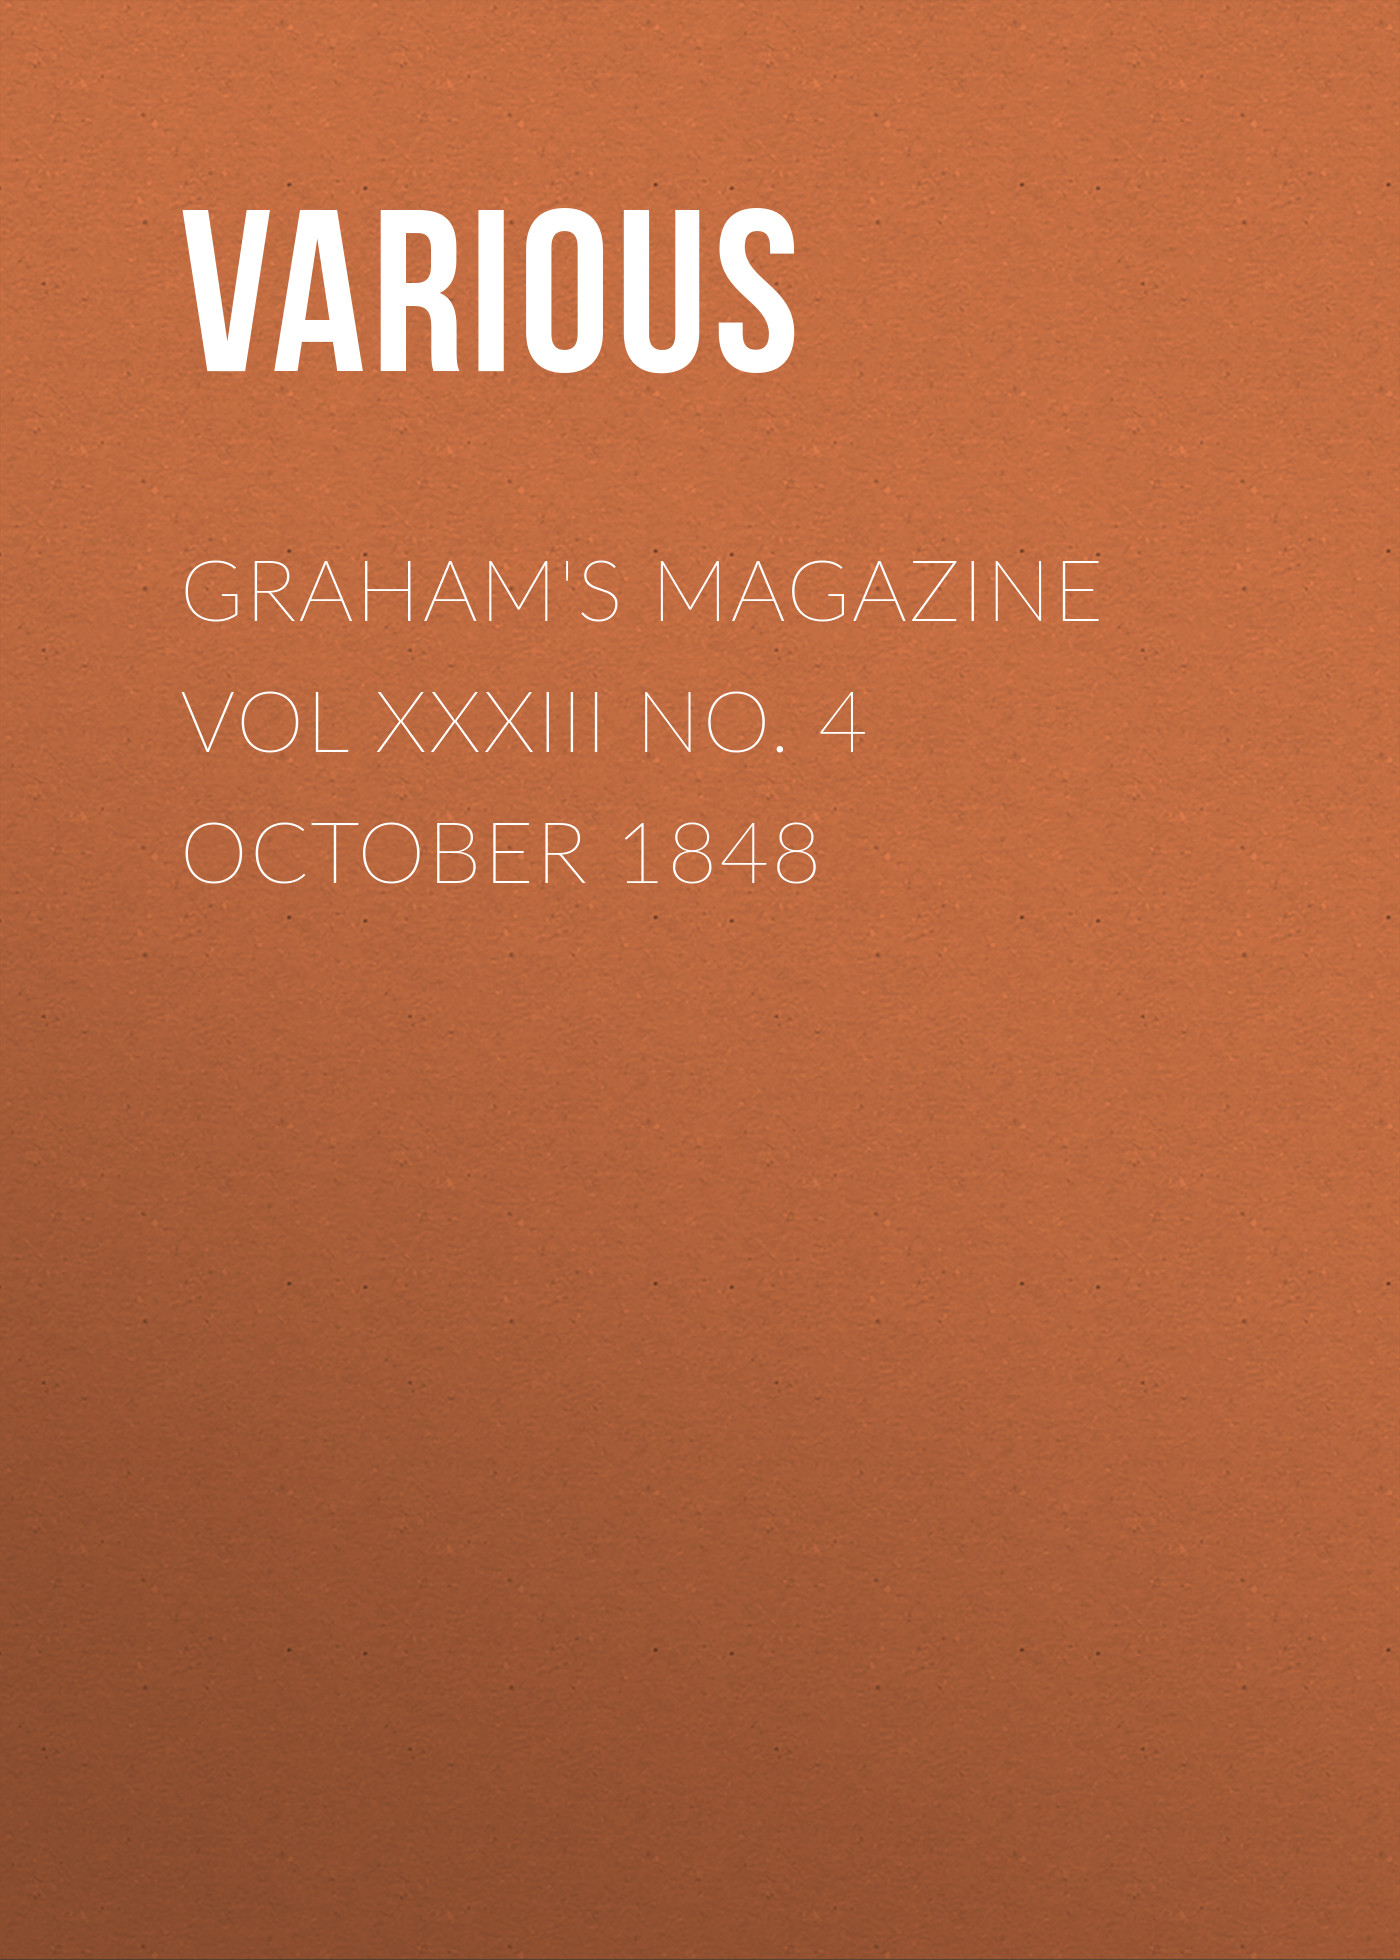 Graham's Magazine Vol XXXIII No. 4 October 1848